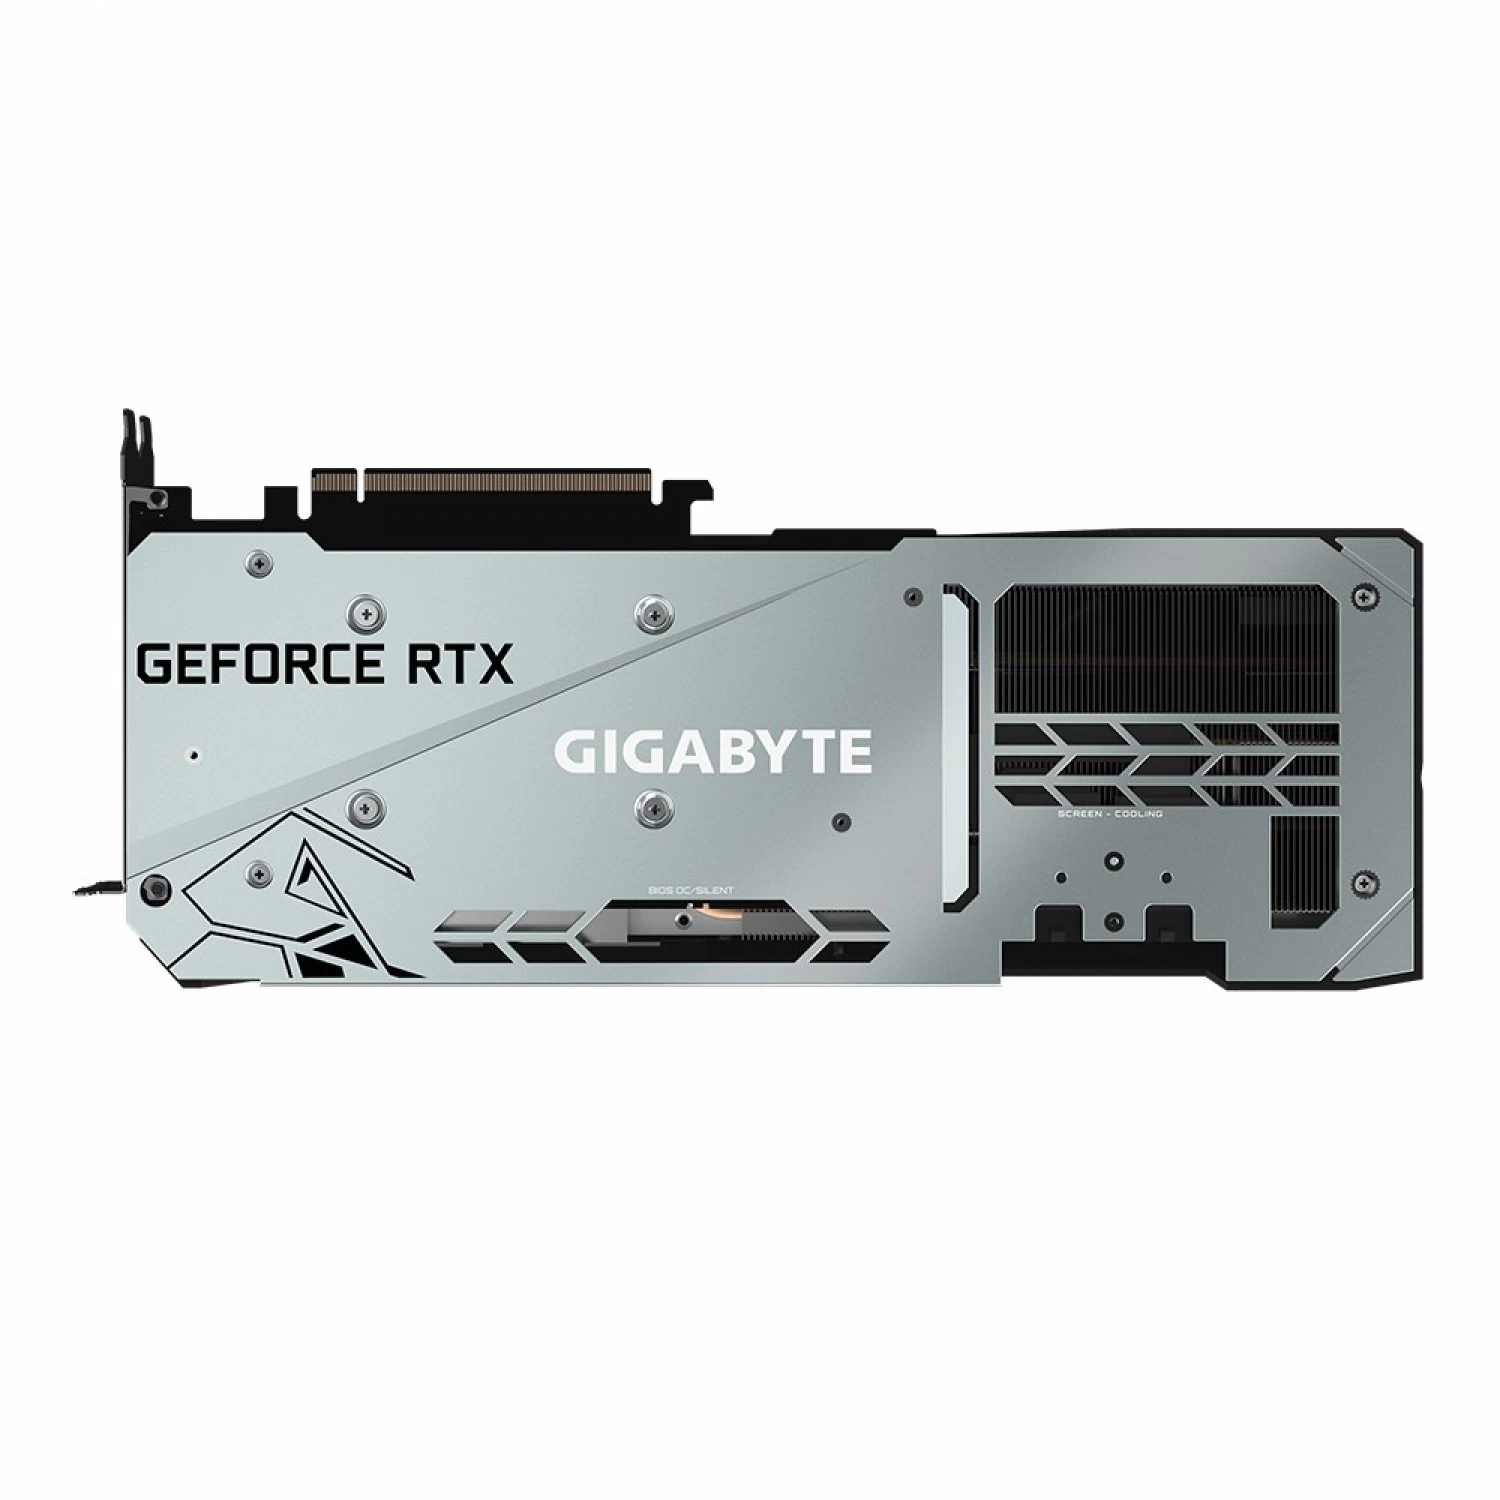 Gigabyte GeForce RTX 3070 Ti GAMING 8G Back View